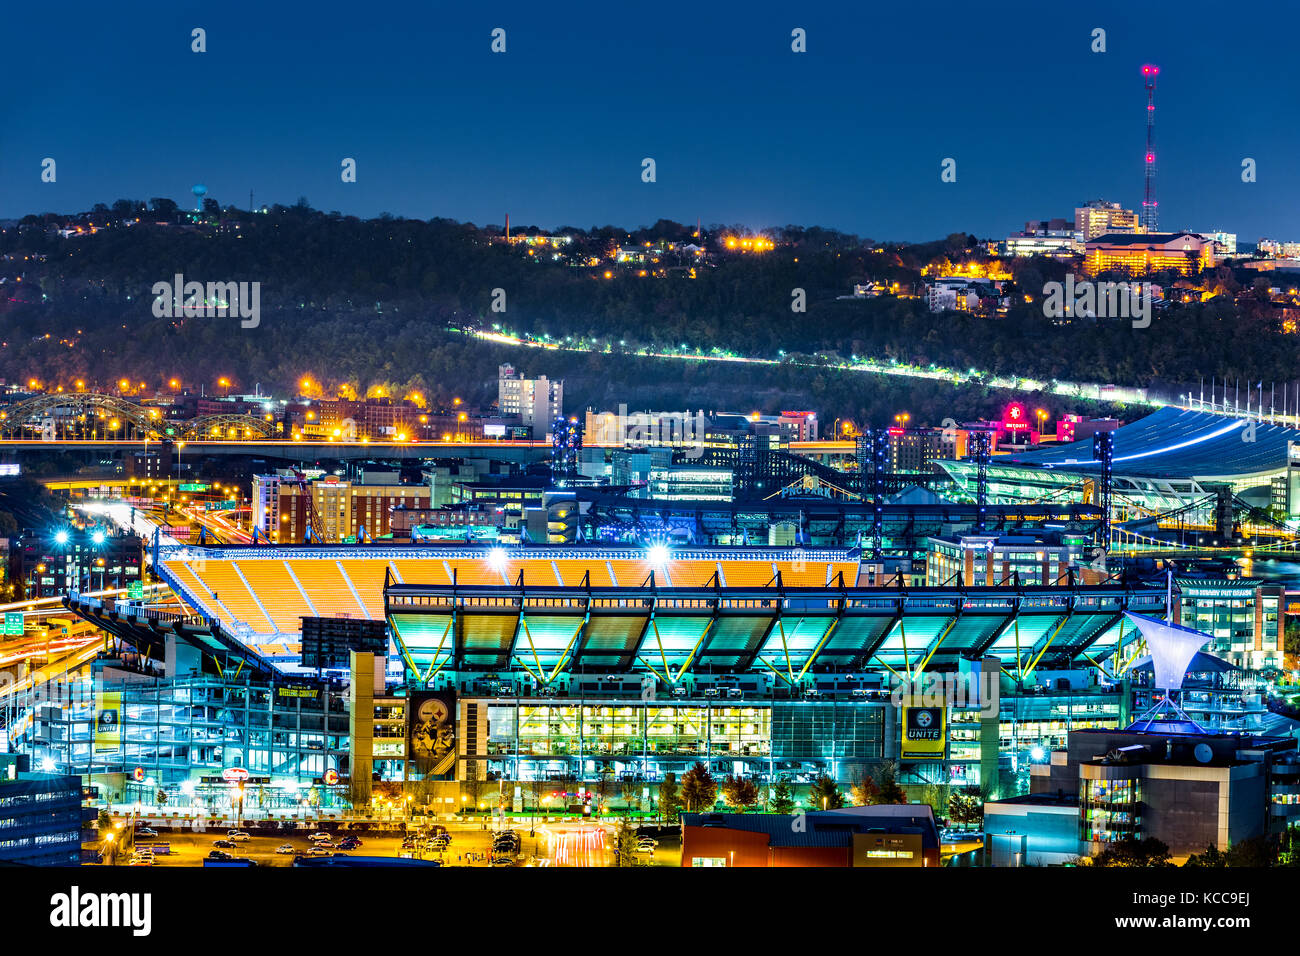 Pittsburgh - Novembre 10, 2016: Heinz Field Stadium di notte. Heinz Field Stadium serve come casa di pittsburgh steelers e pittsburgh panther Foto Stock